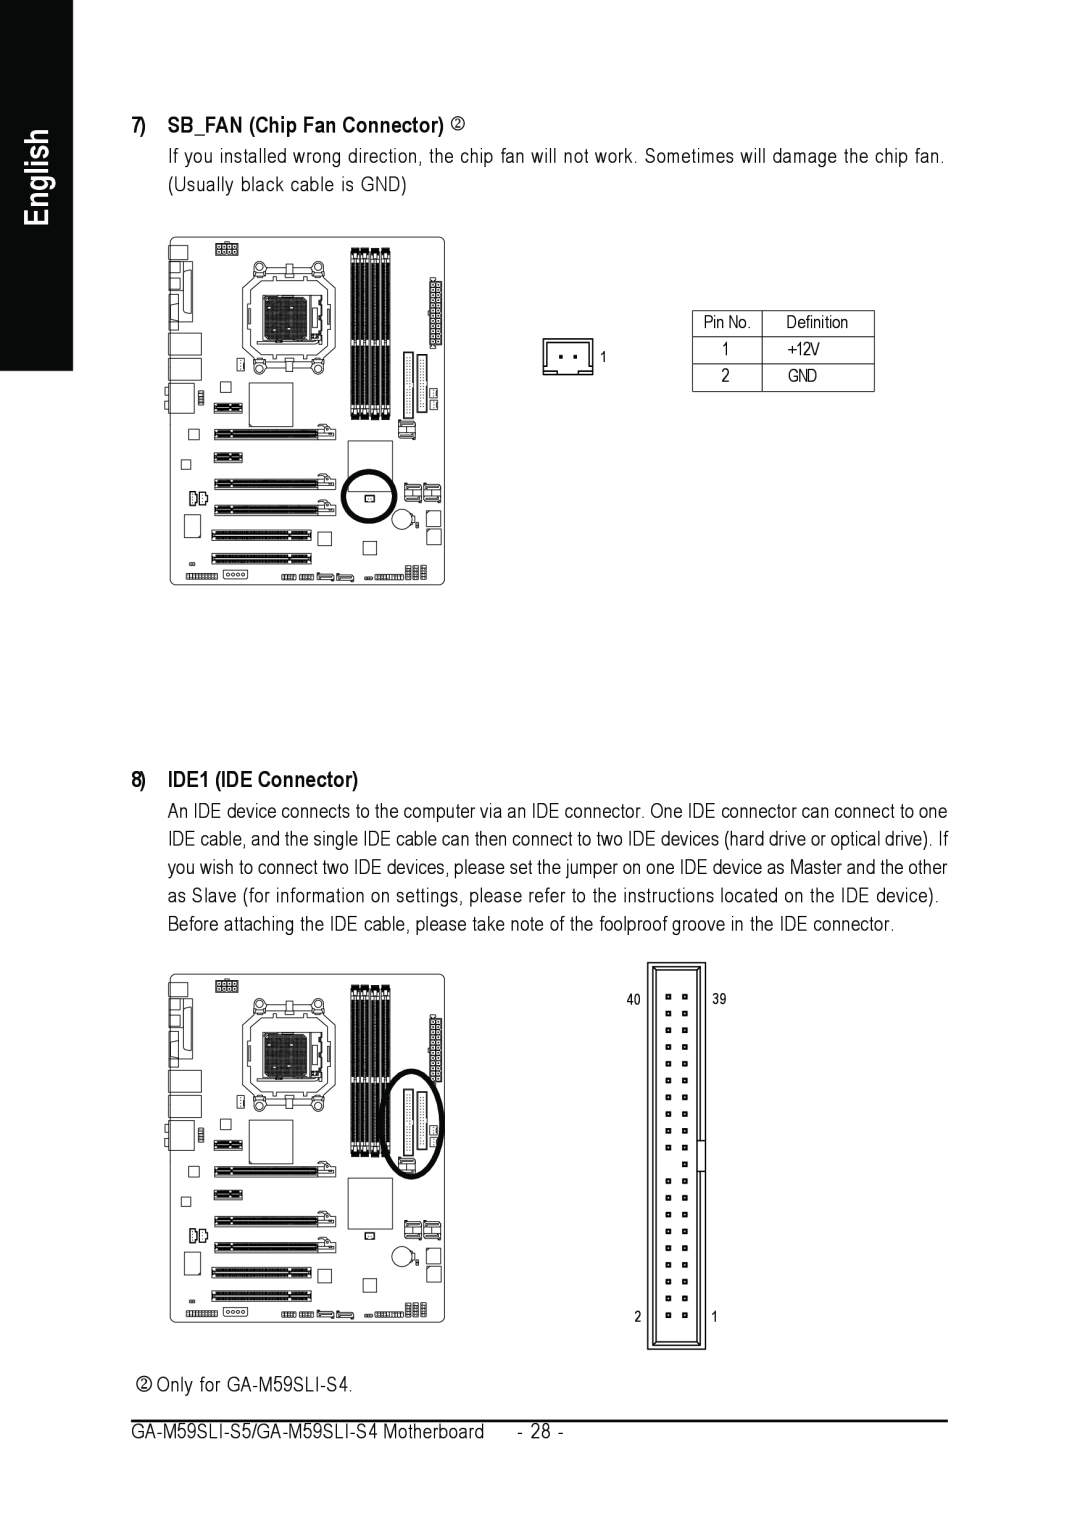 Gigabyte GA-M59SLI-S5 user manual SBFAN Chip Fan Connector, 8 IDE1 IDE Connector, English, Only for GA-M59SLI-S4 